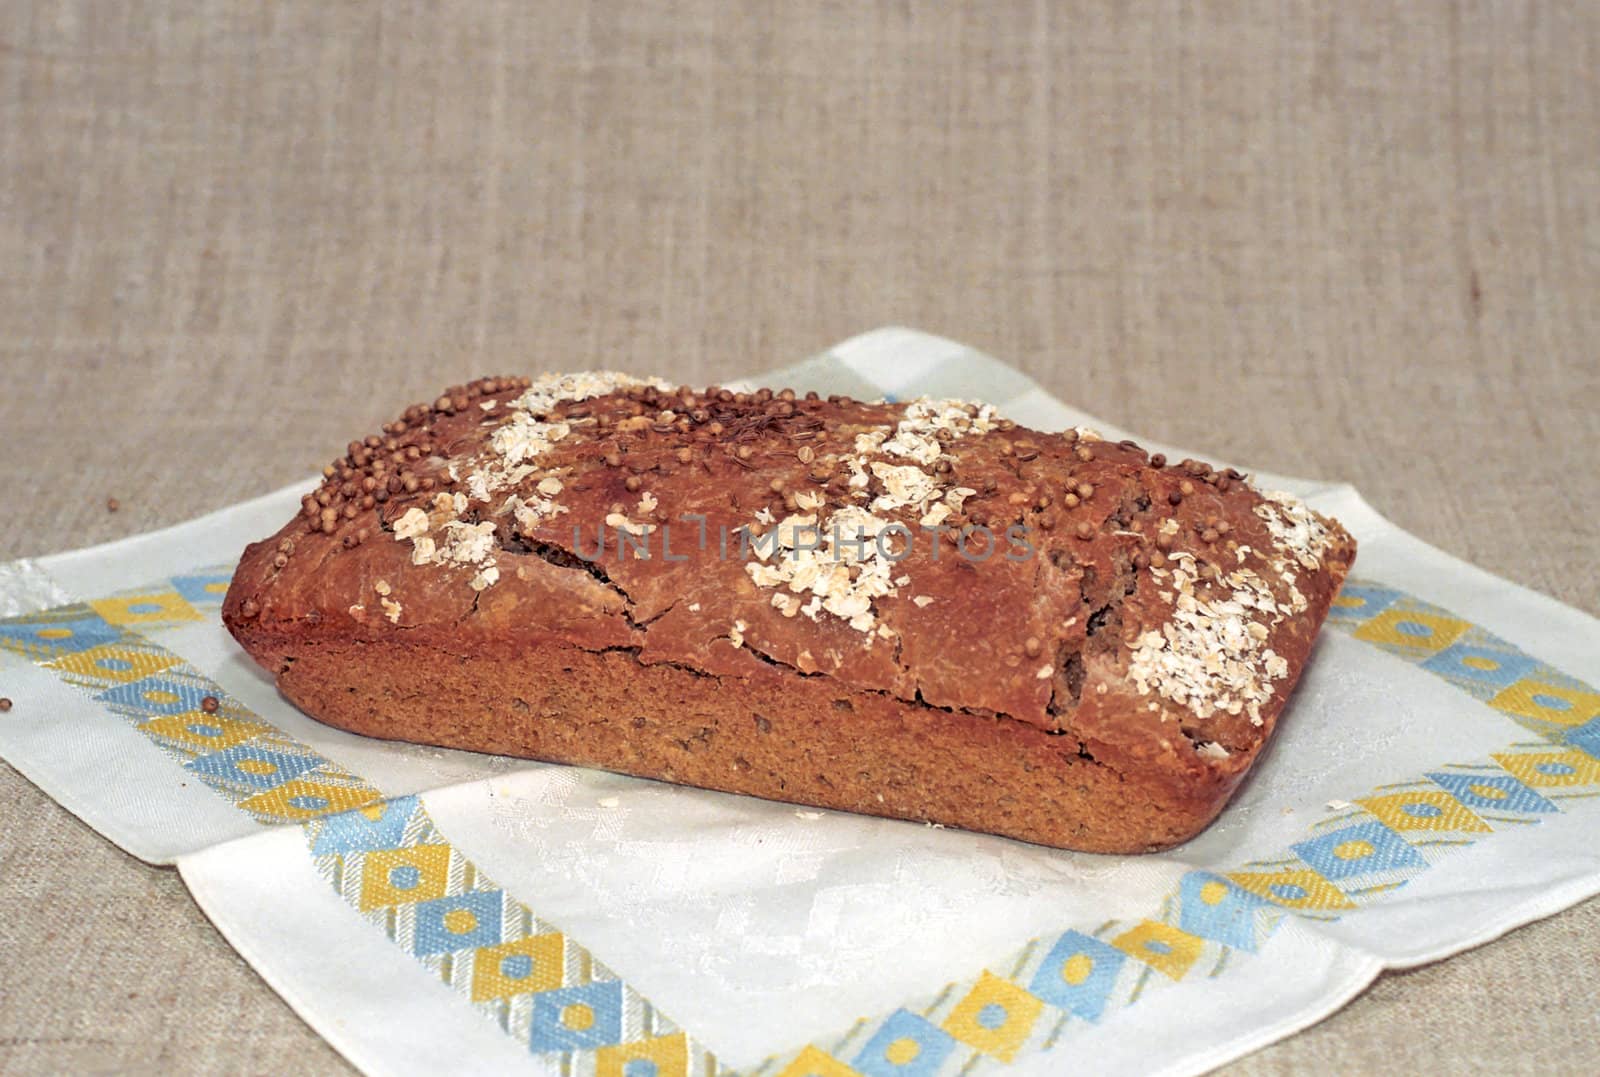 A loaf of rye bread on dish-cloth